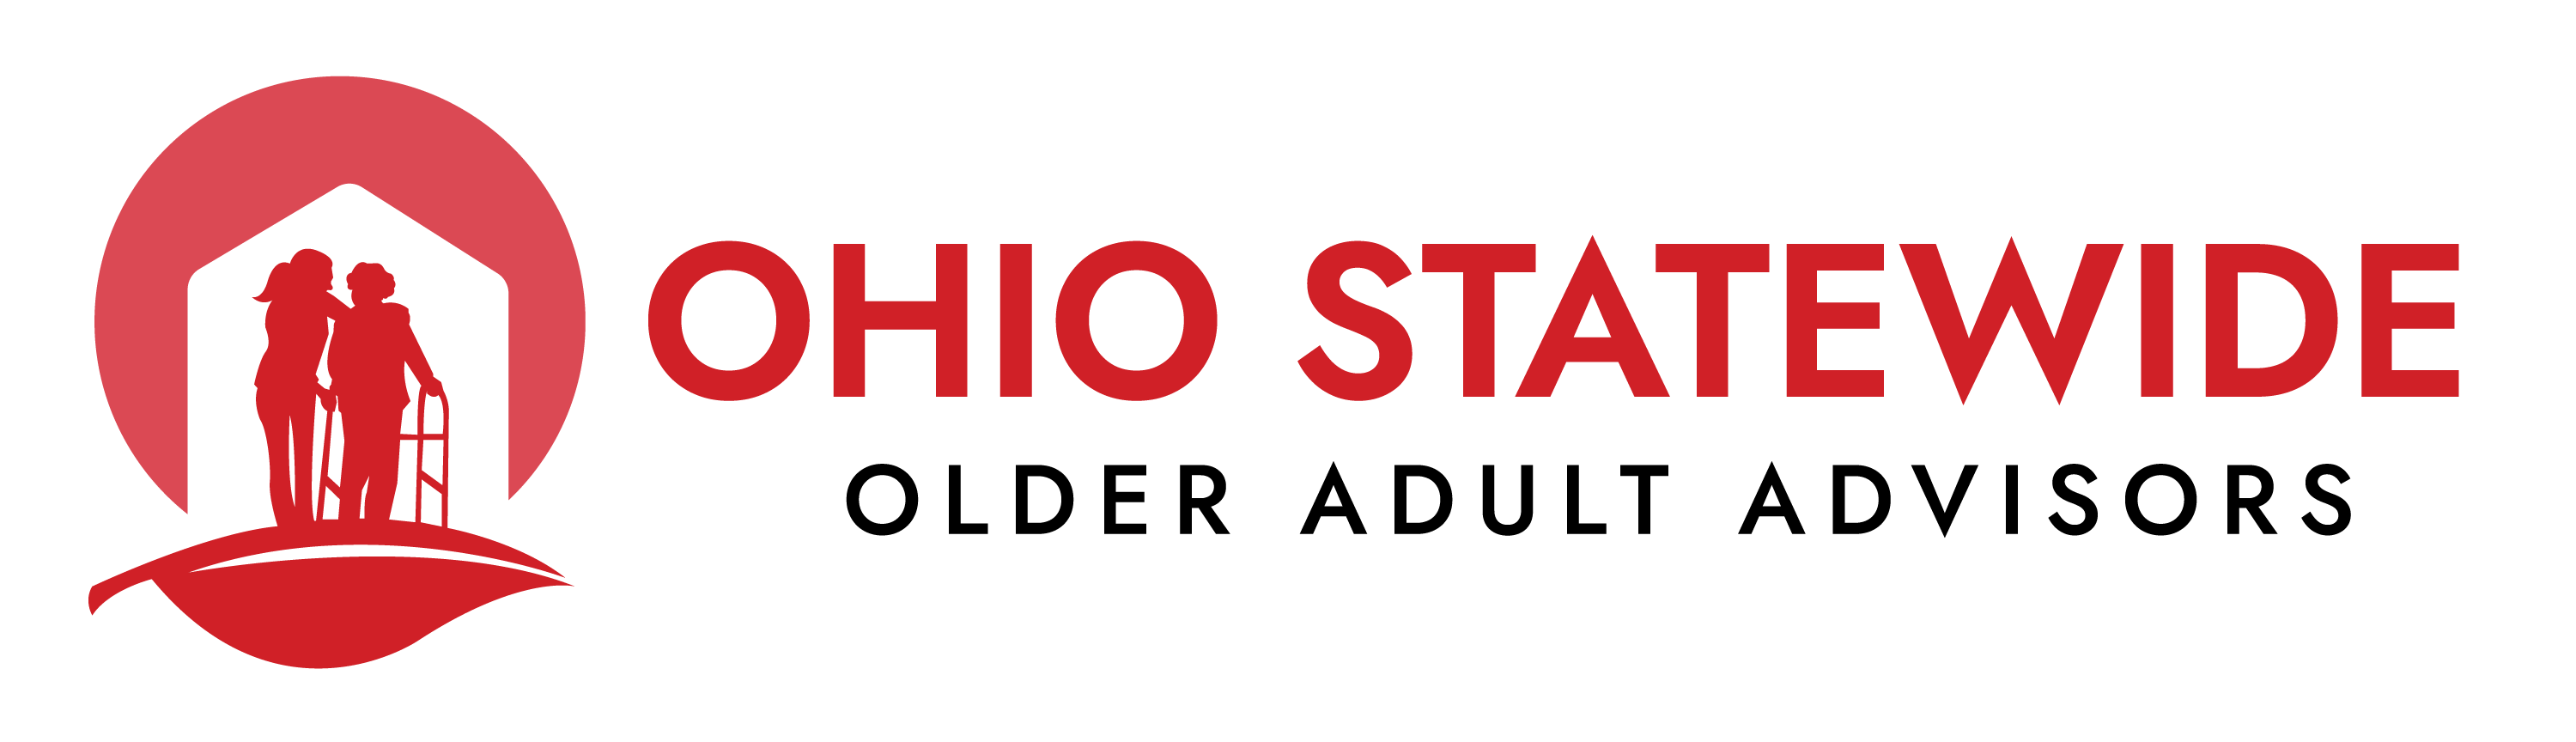 Ohio statewide